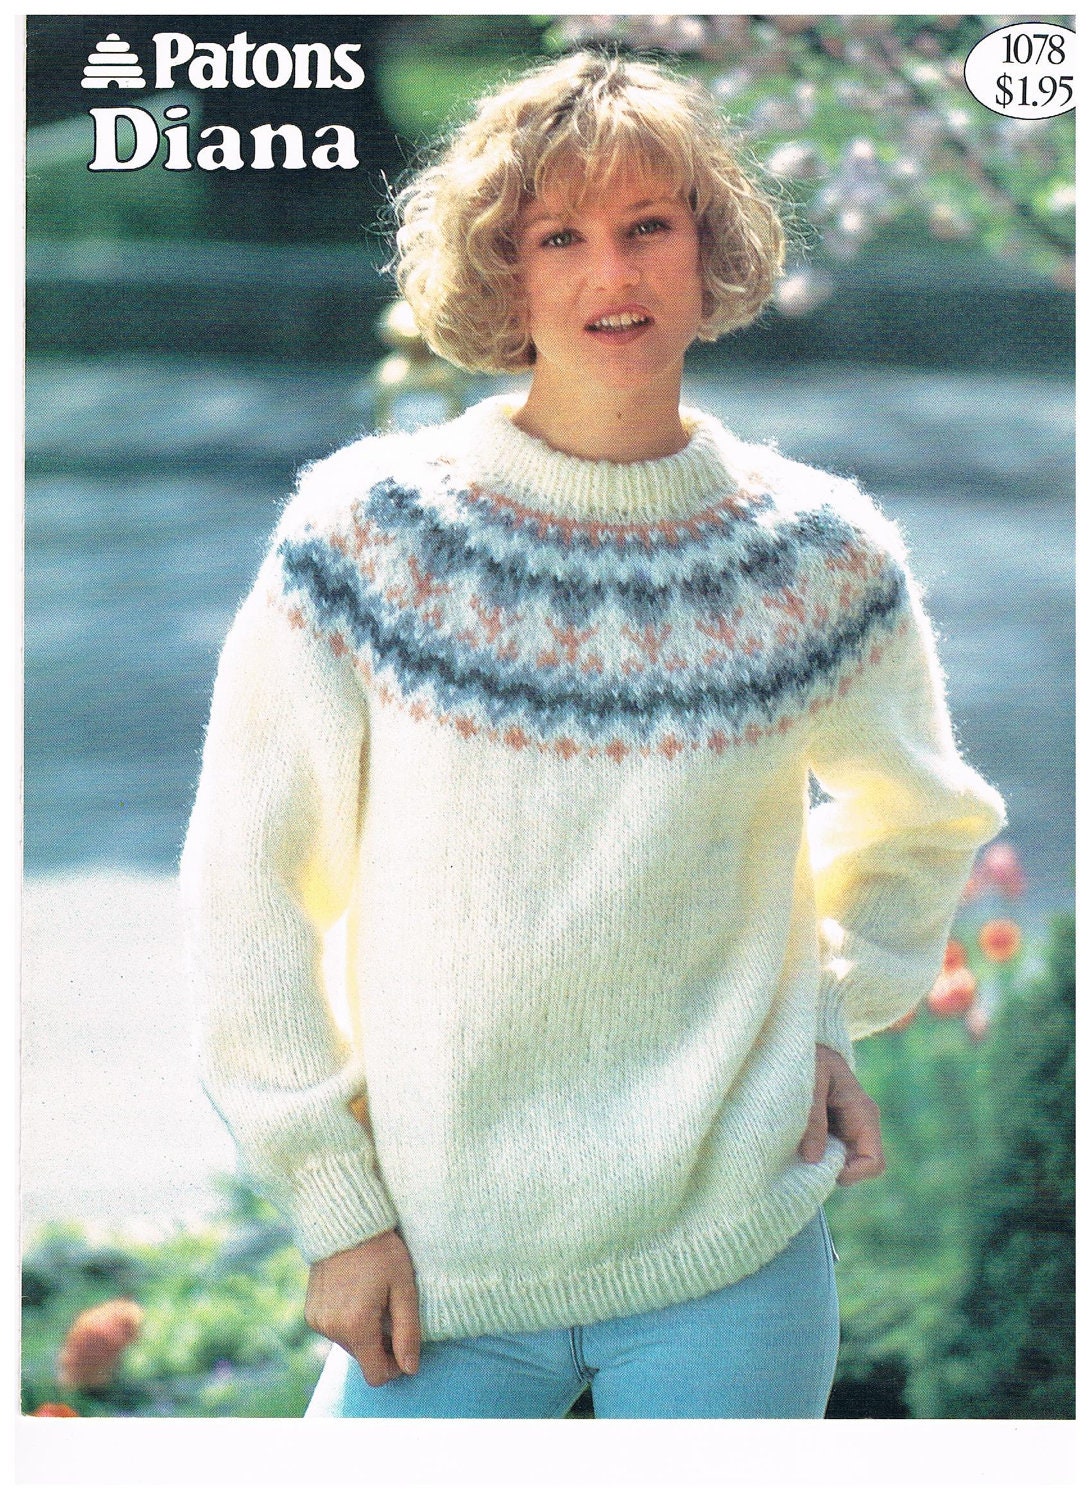 Vintage Patons Diana Knitting Pattern FREE SHIPPING